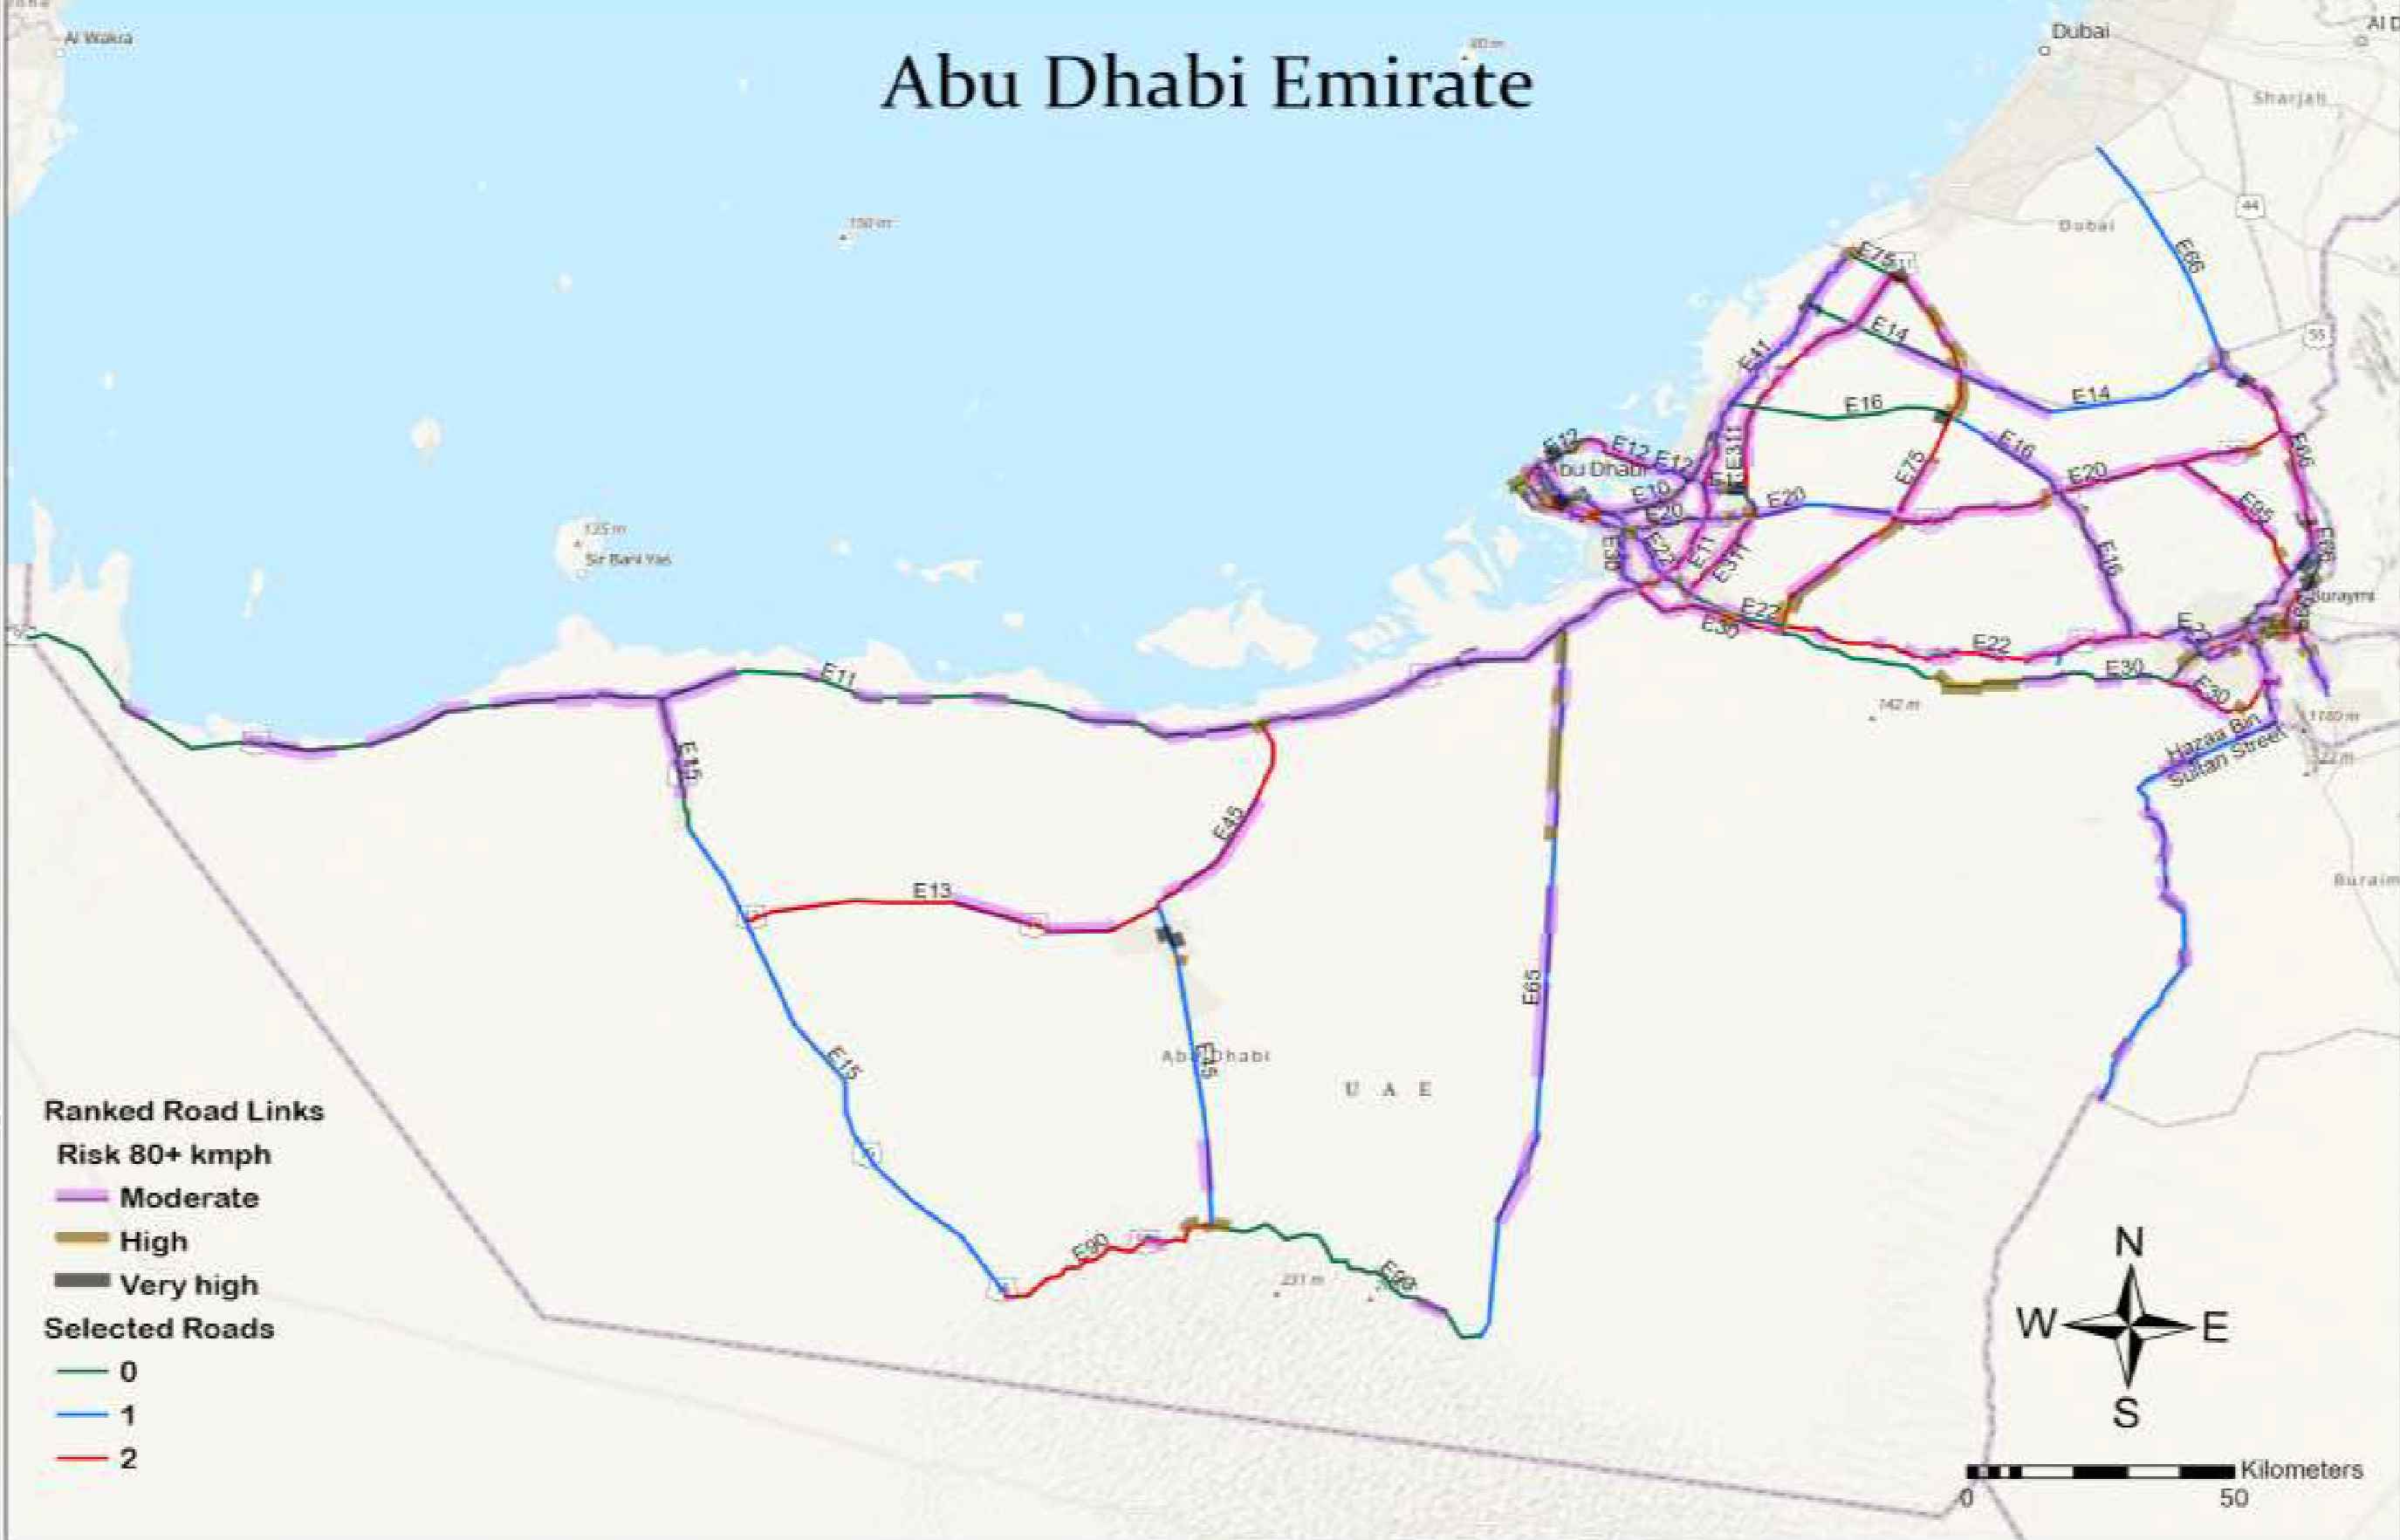 Designing Very High-Risk Road Length Treatments in Abu Dhabi Region  